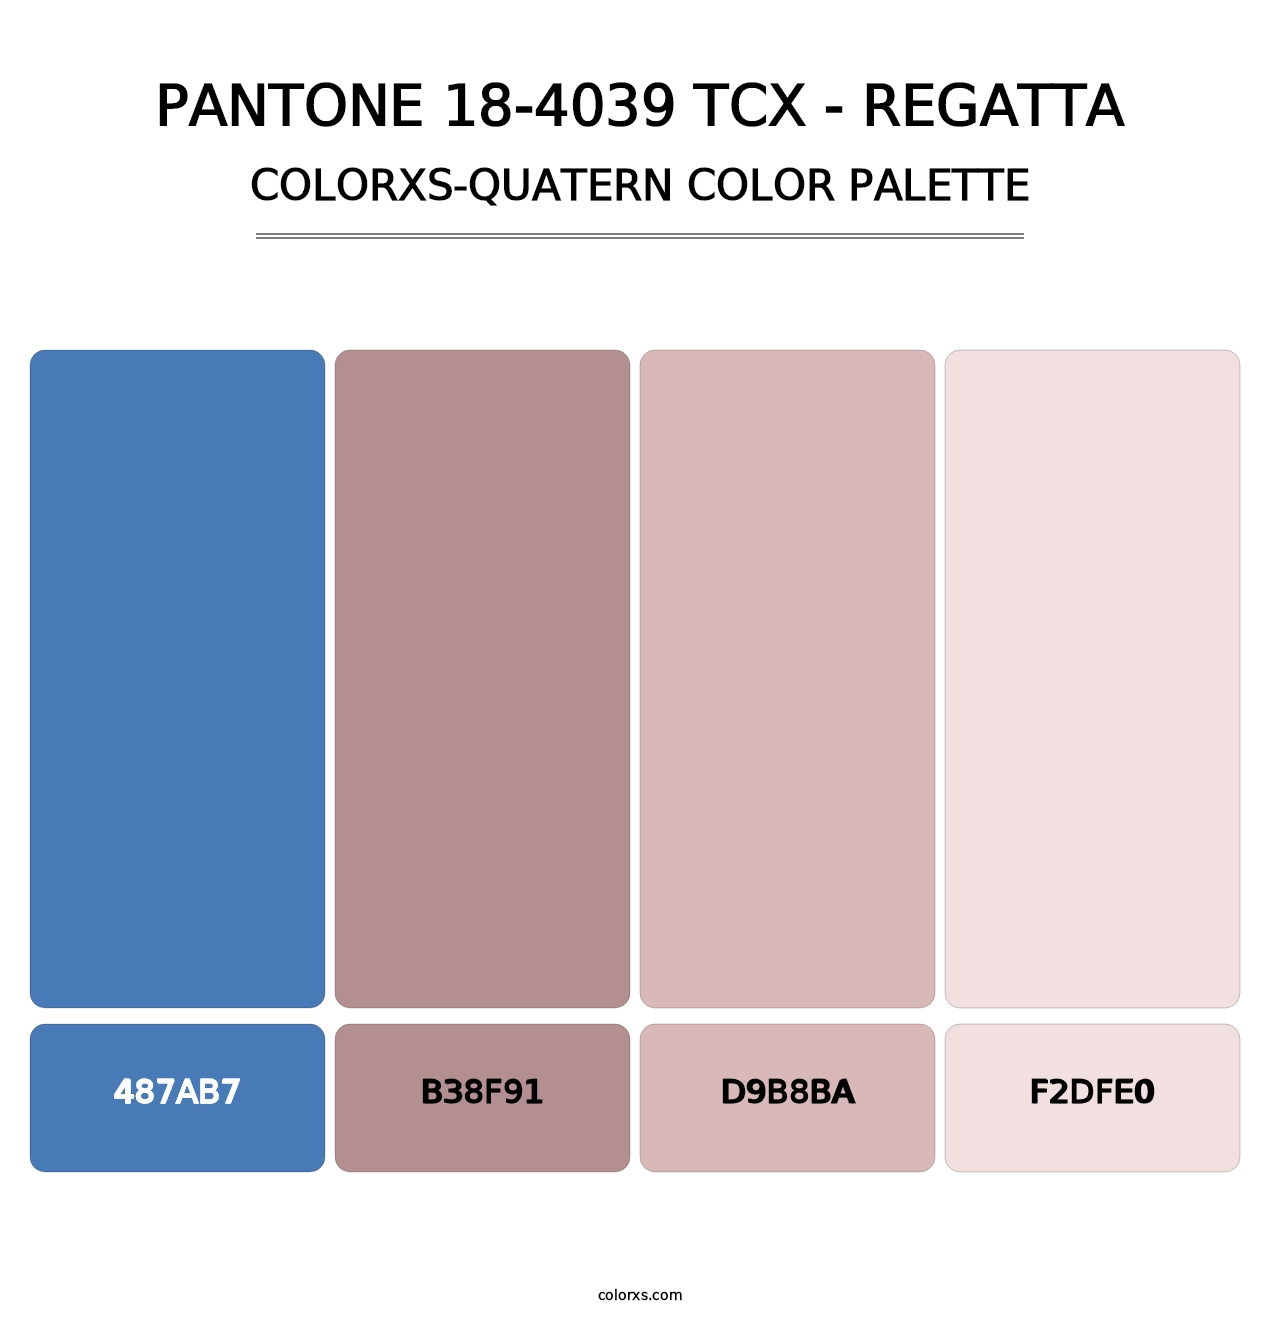 PANTONE 18-4039 TCX - Regatta - Colorxs Quatern Palette